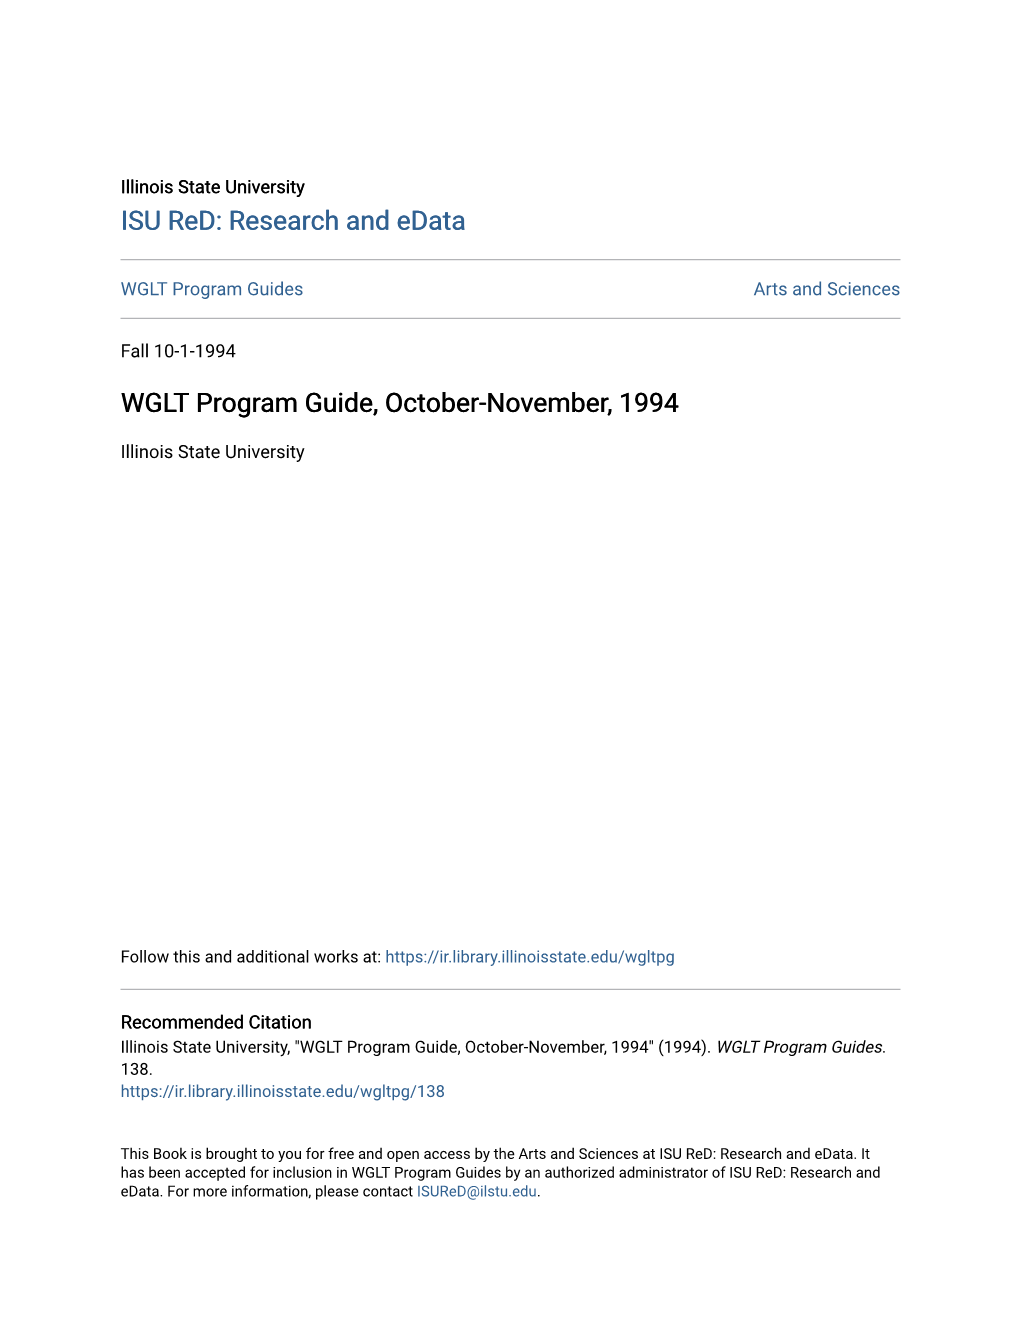 WGLT Program Guide, October-November, 1994